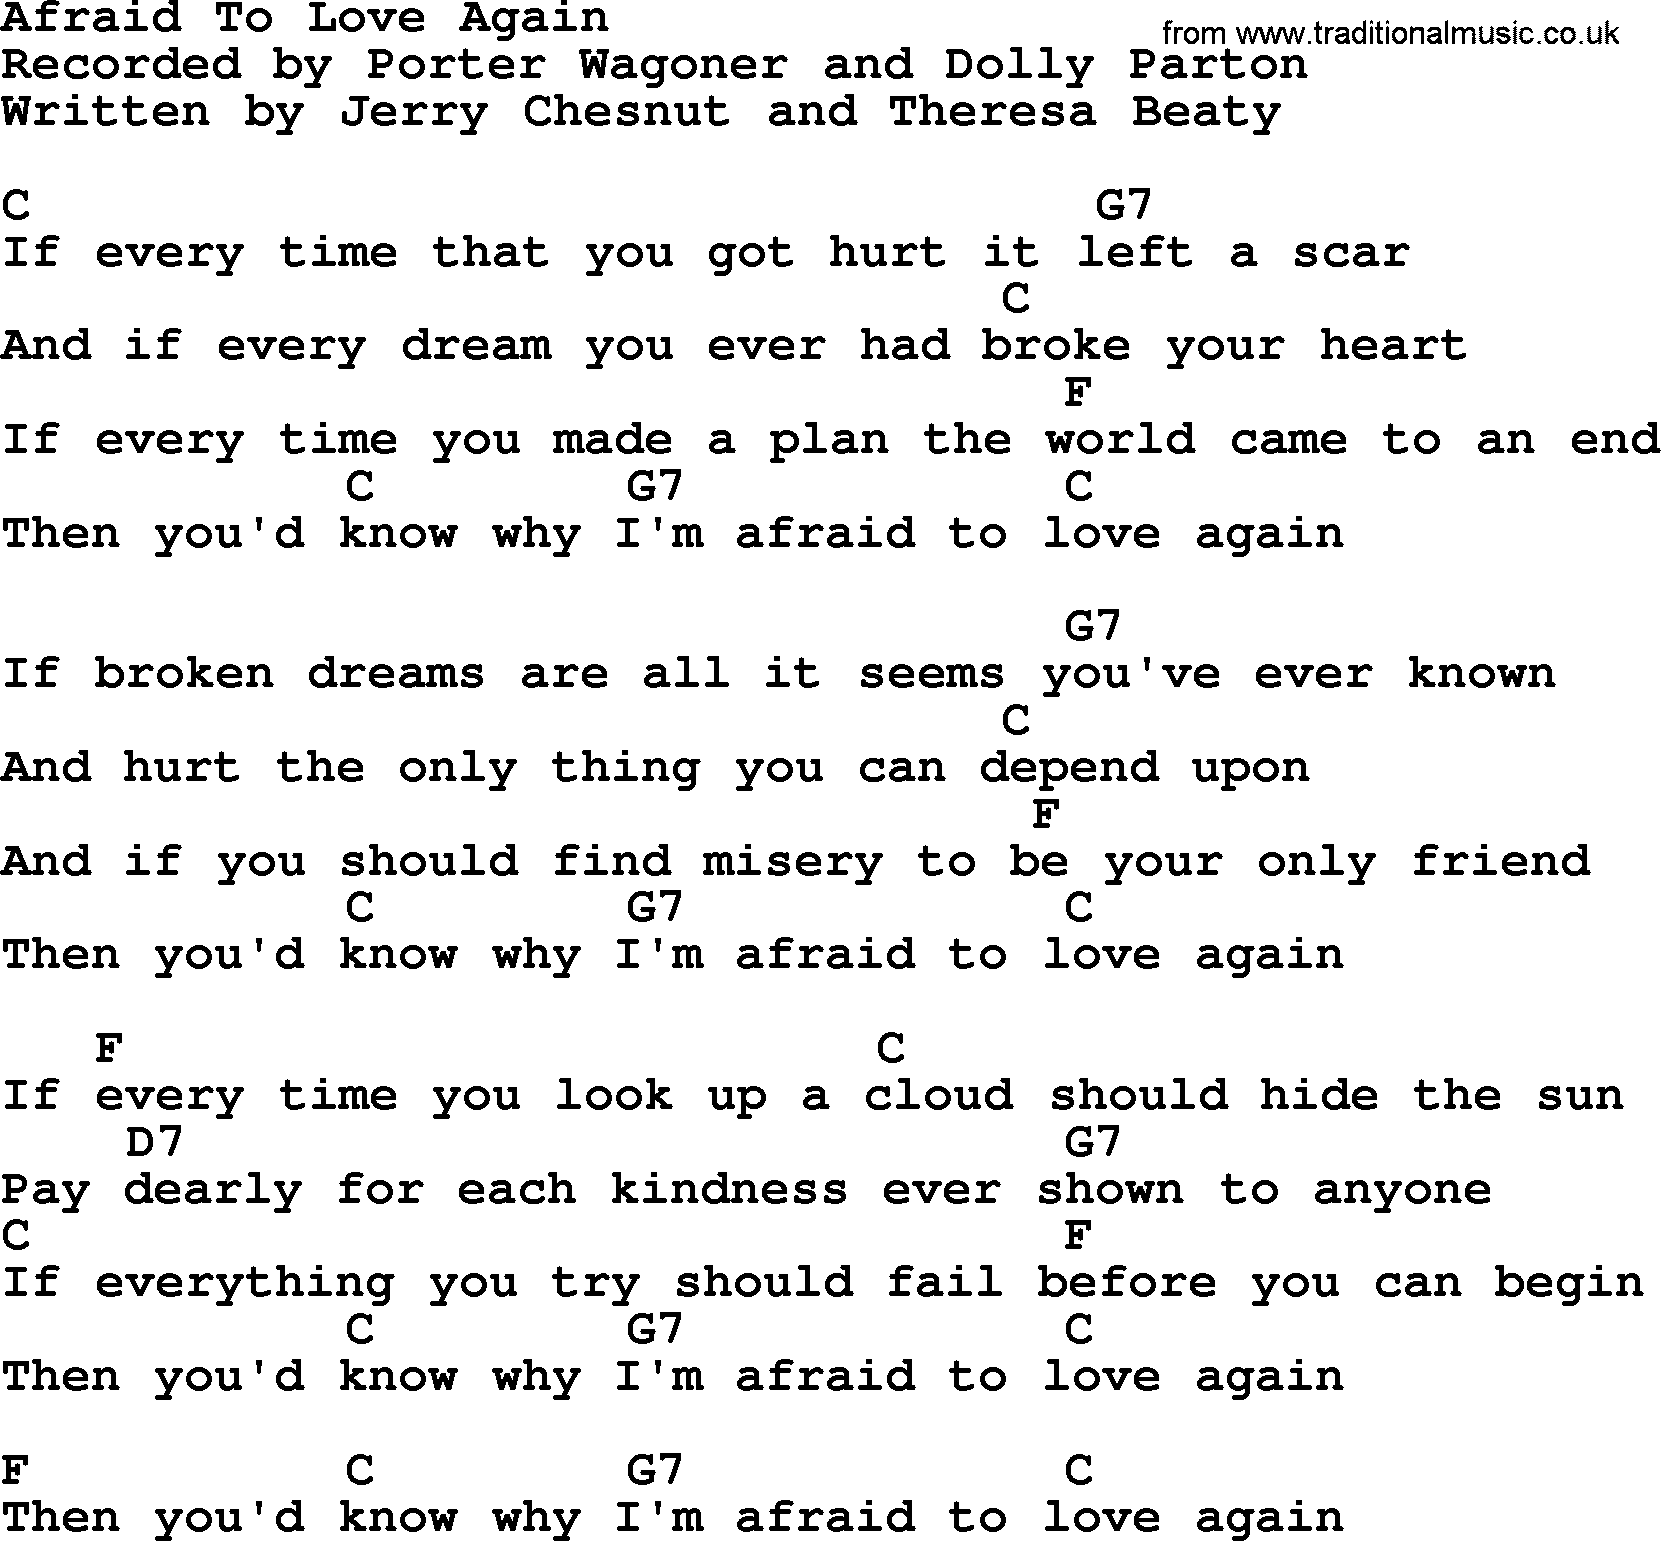 Dolly Parton song Afraid To Love Again, lyrics and chords